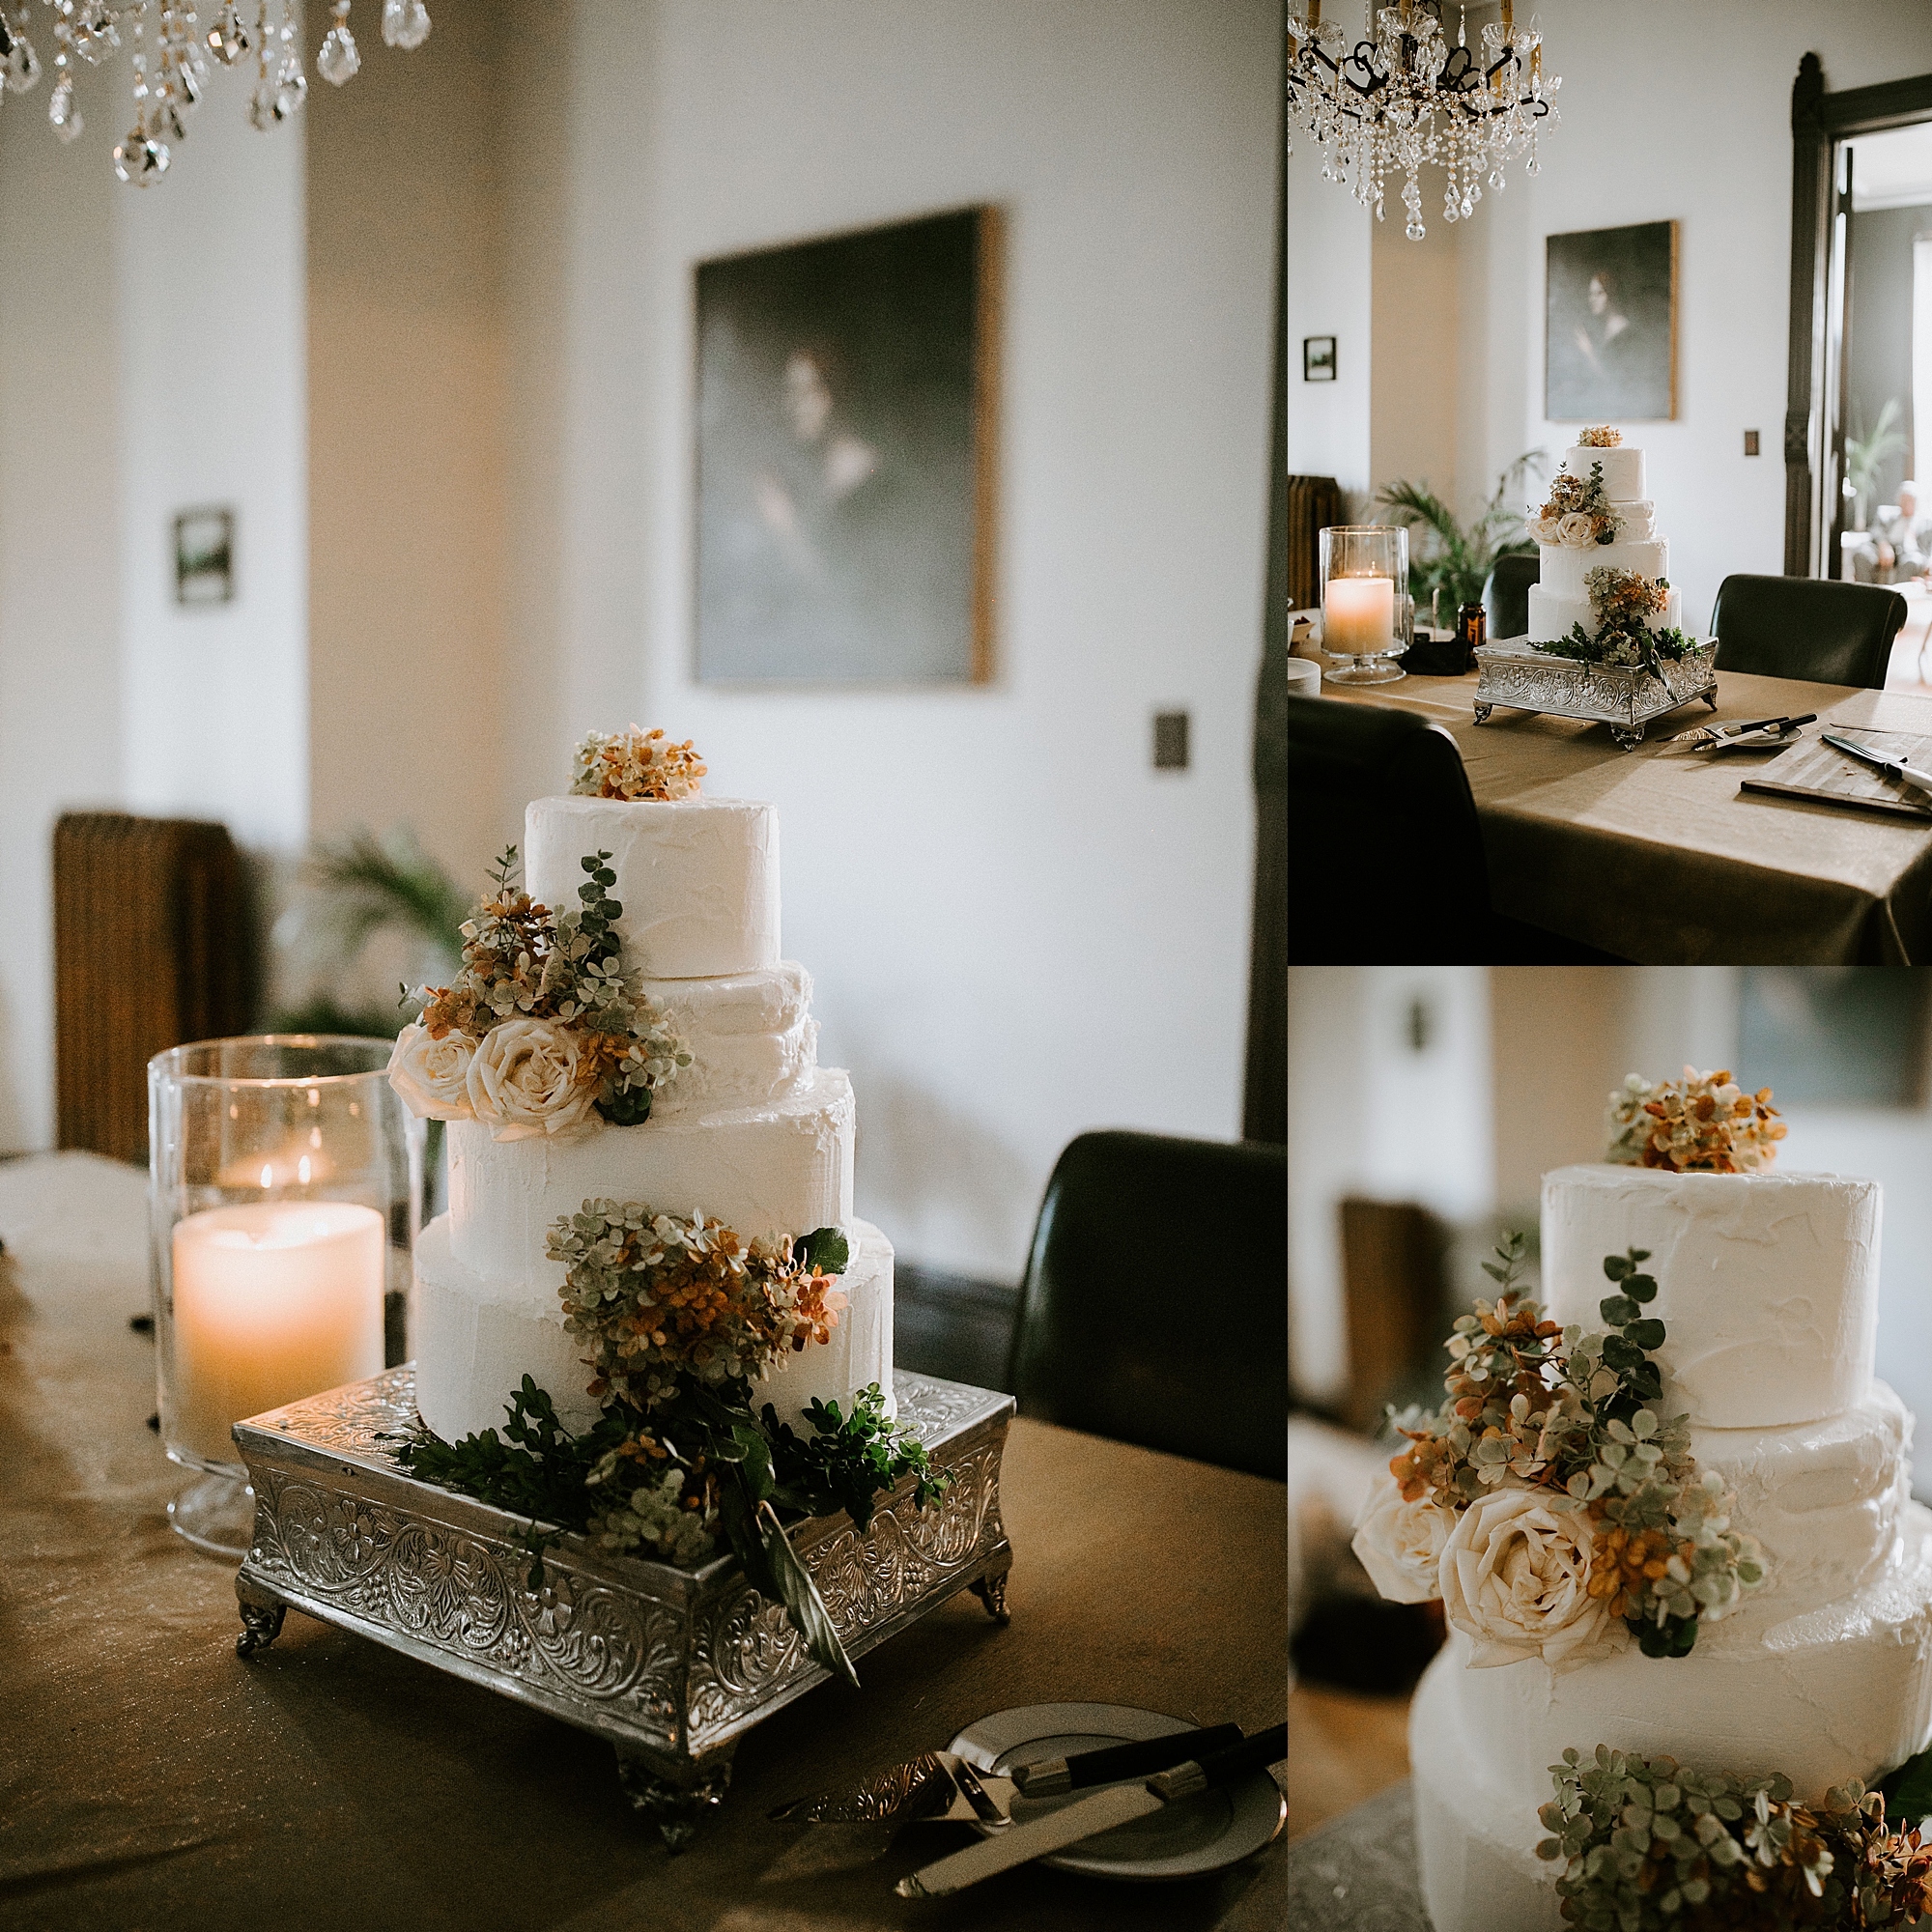 destination wedding photography packages; wedding cake design